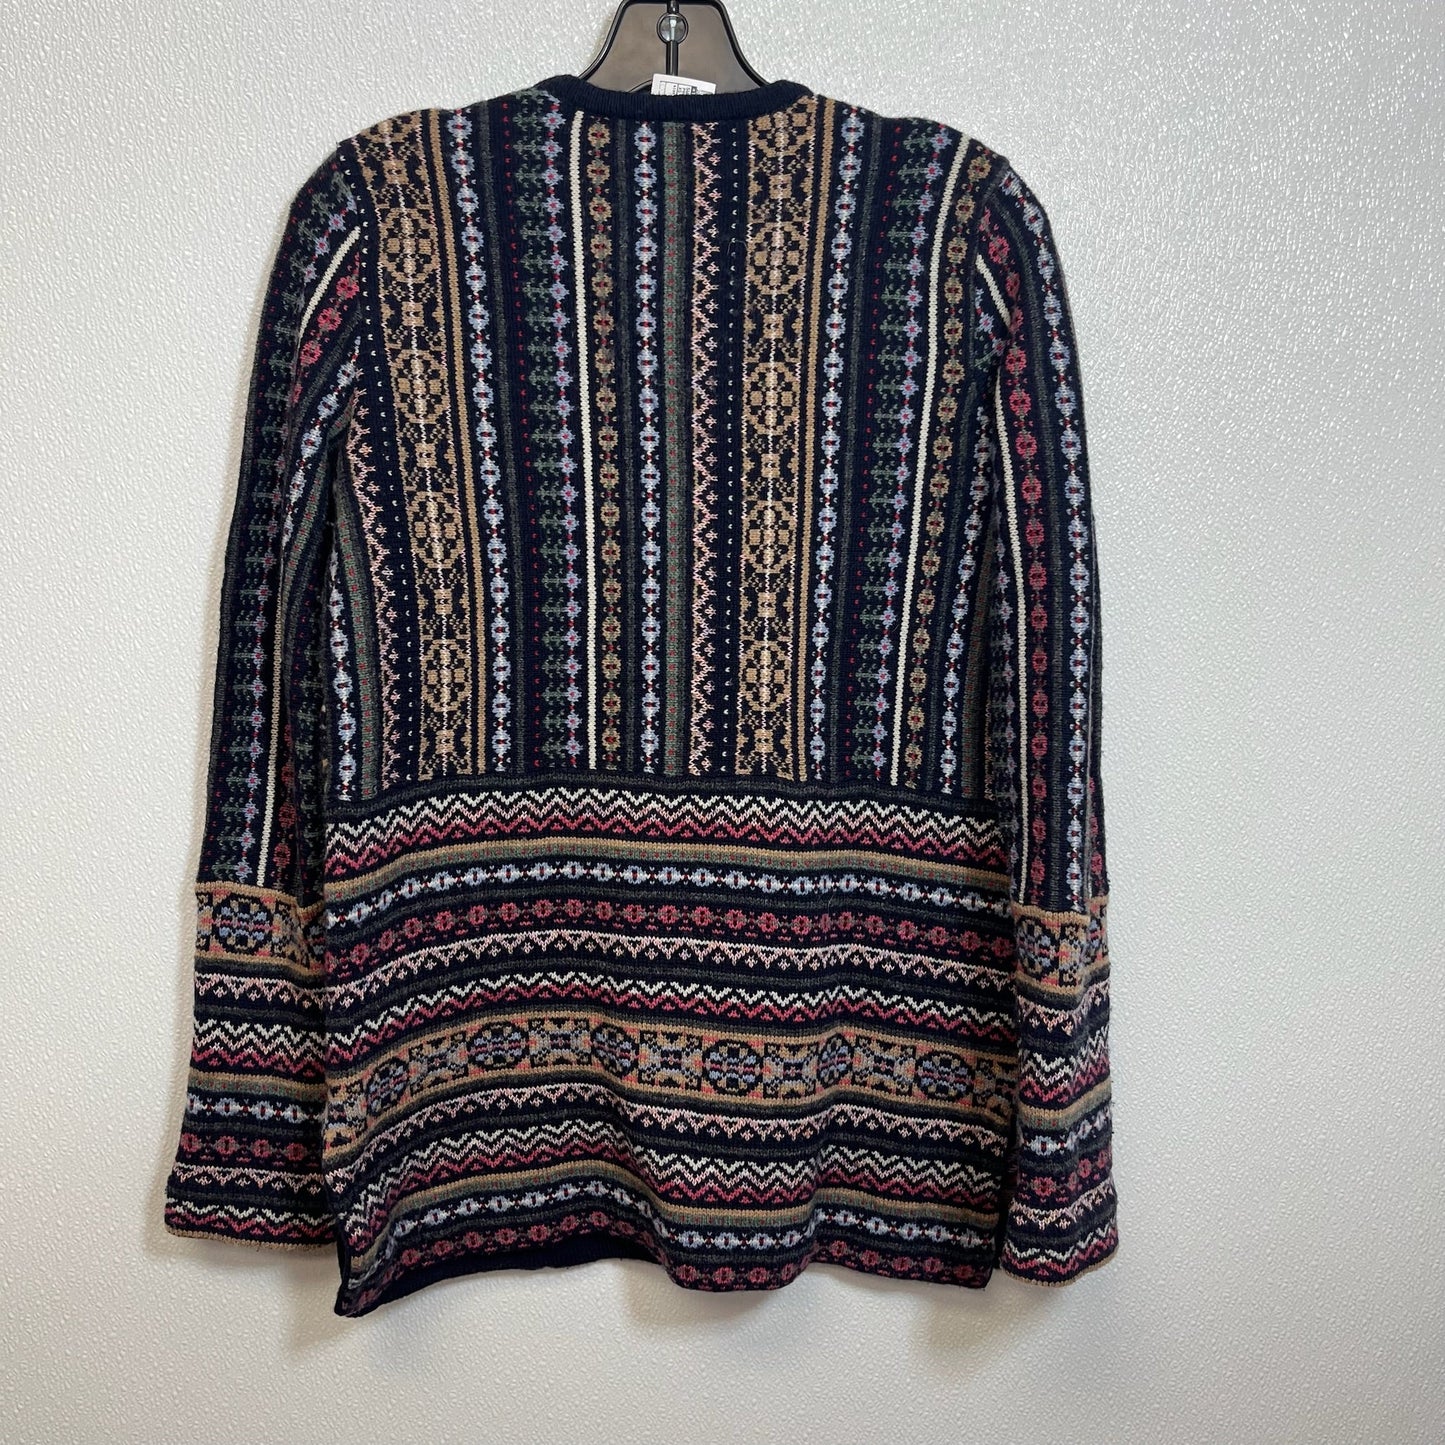 Sweater By Tory Burch  Size: Xs